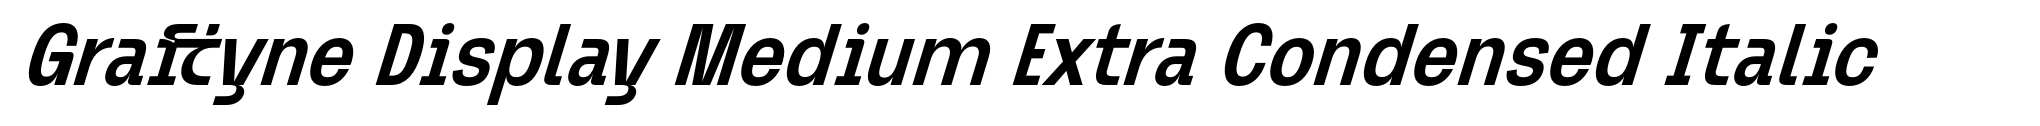 Graftyne Display Medium Extra Condensed Italic image